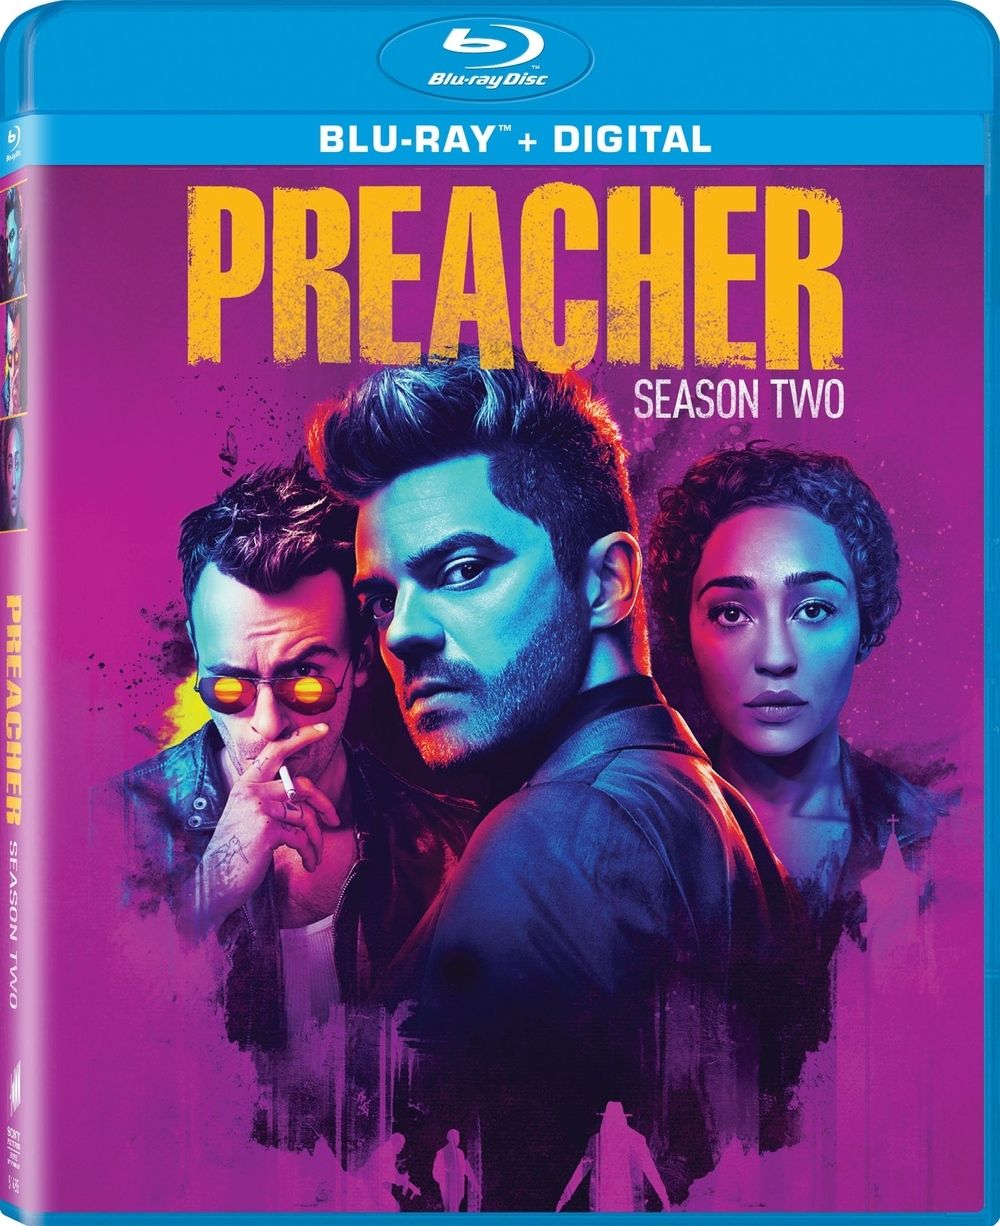 Preacher season 2 blu-ray cover art